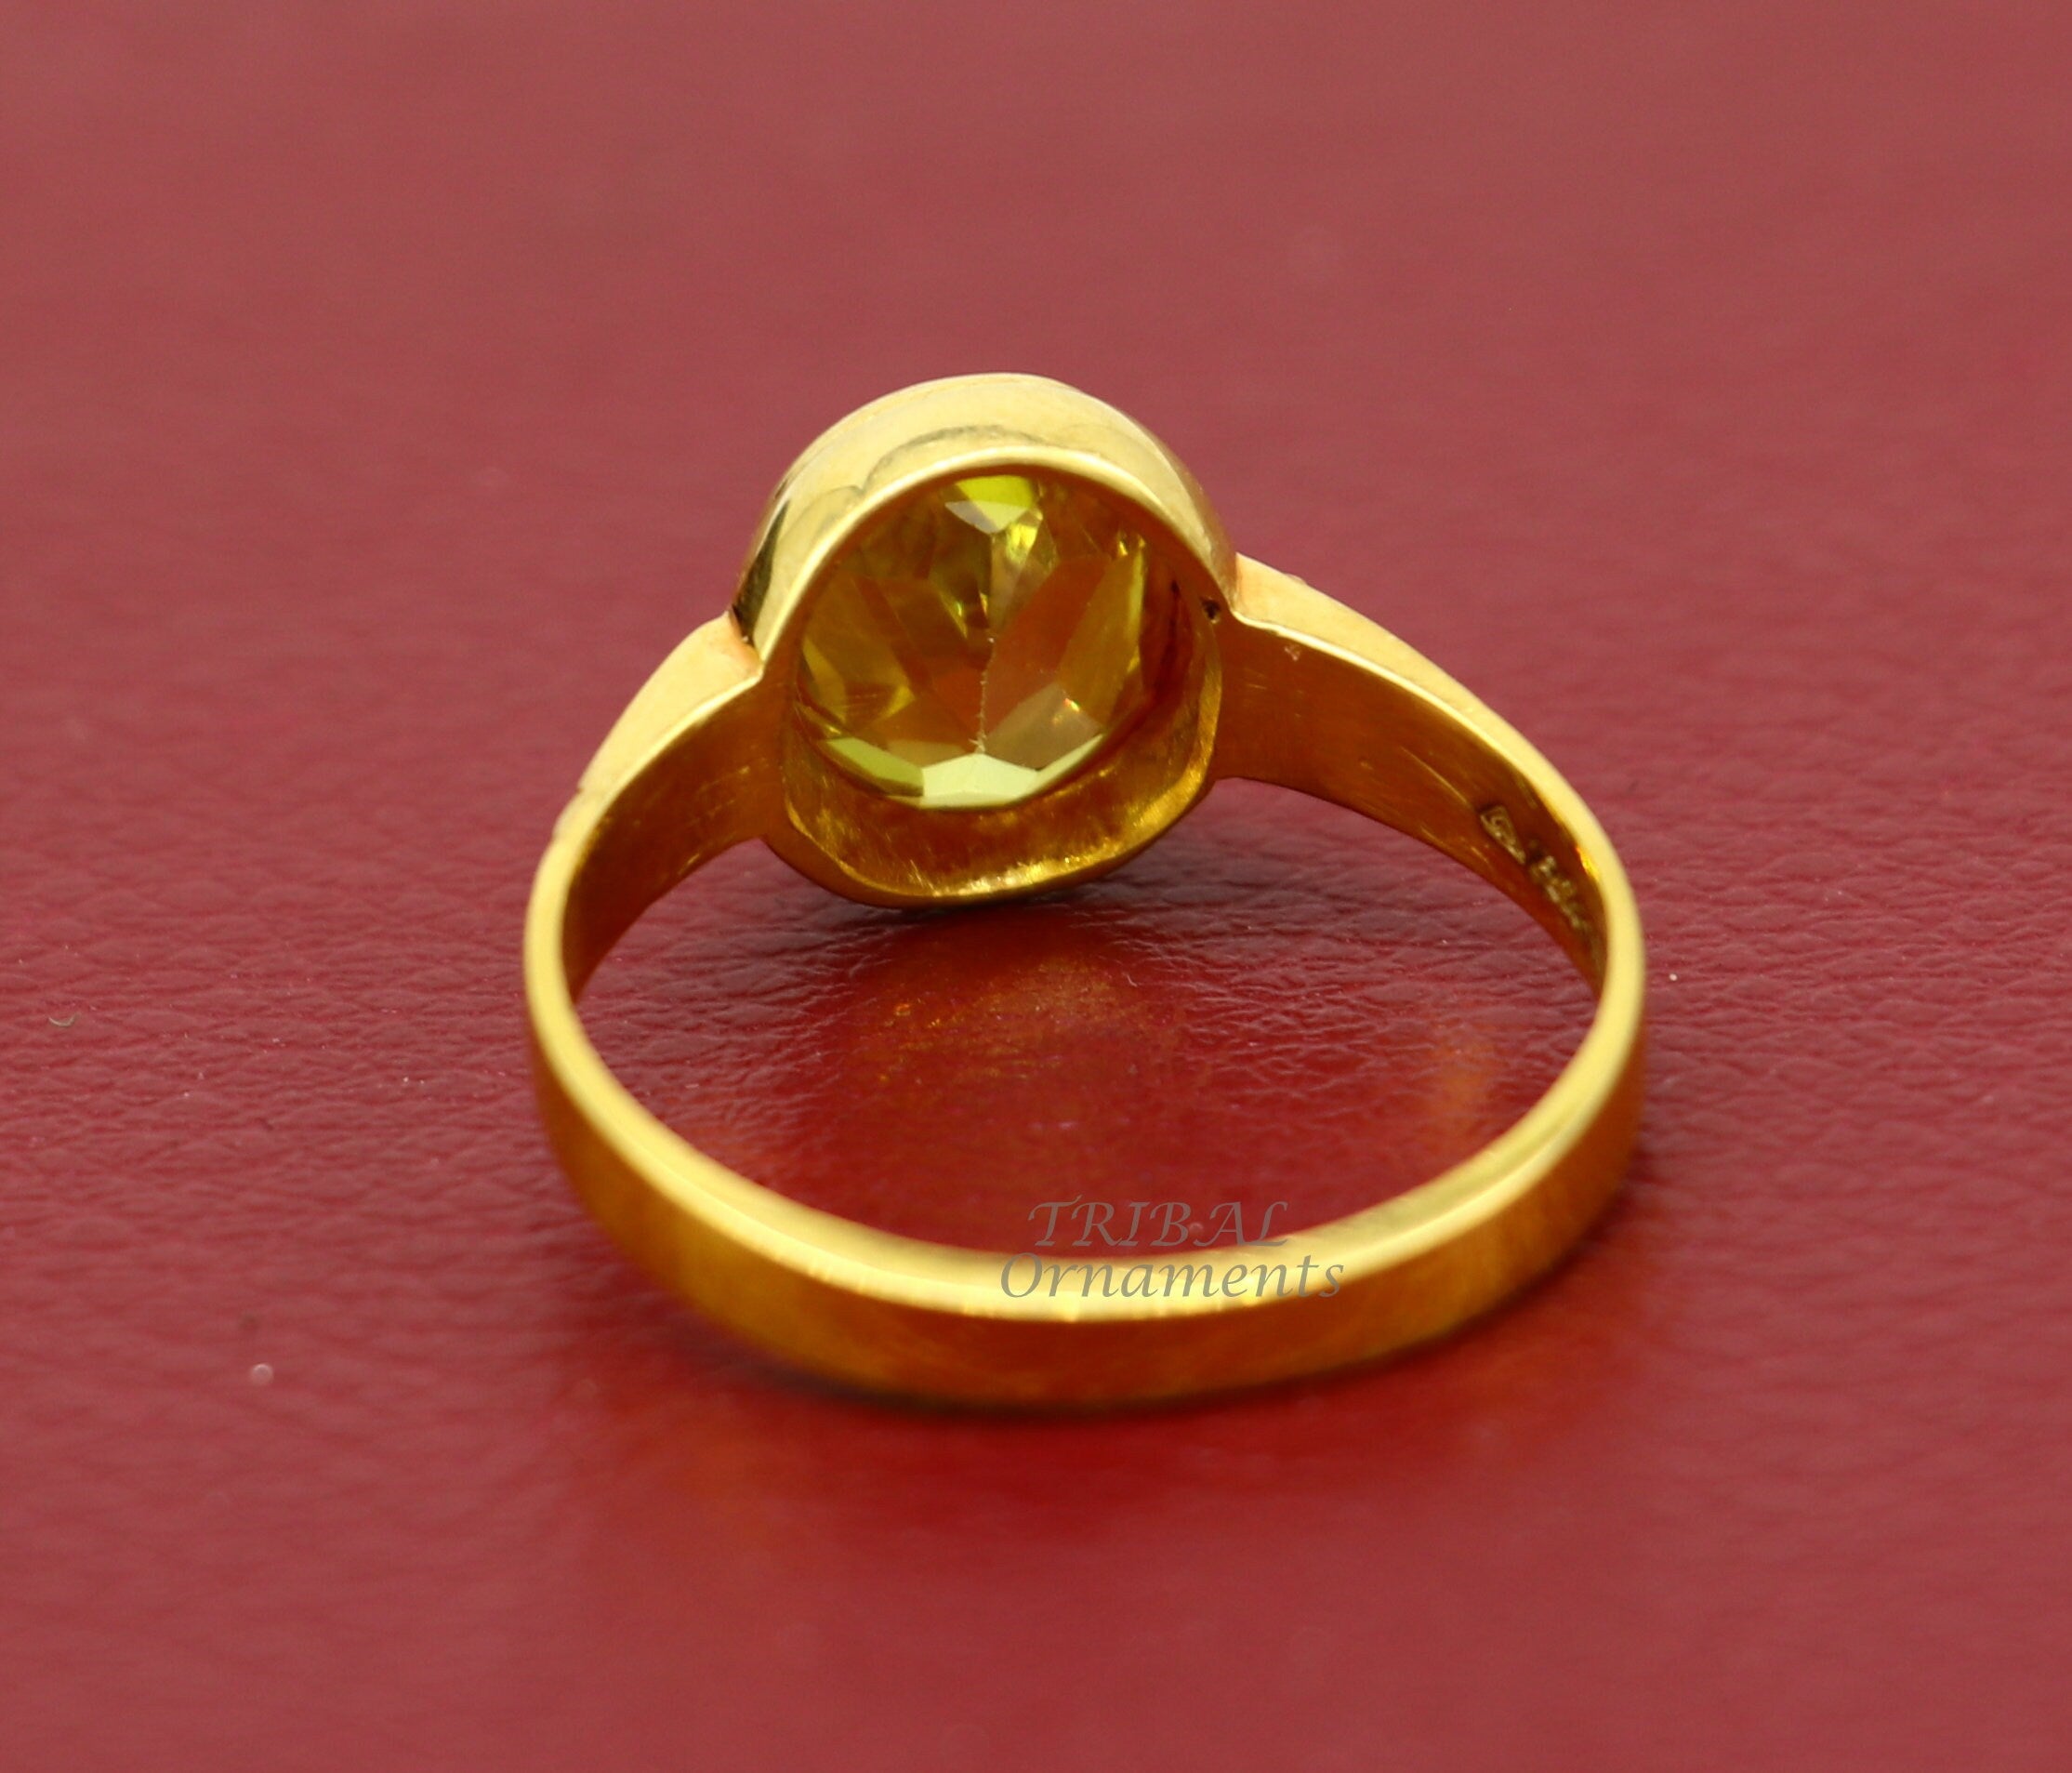 Personalized Greenwich 2 Birthstone & Diamond Ring in 14k Gold